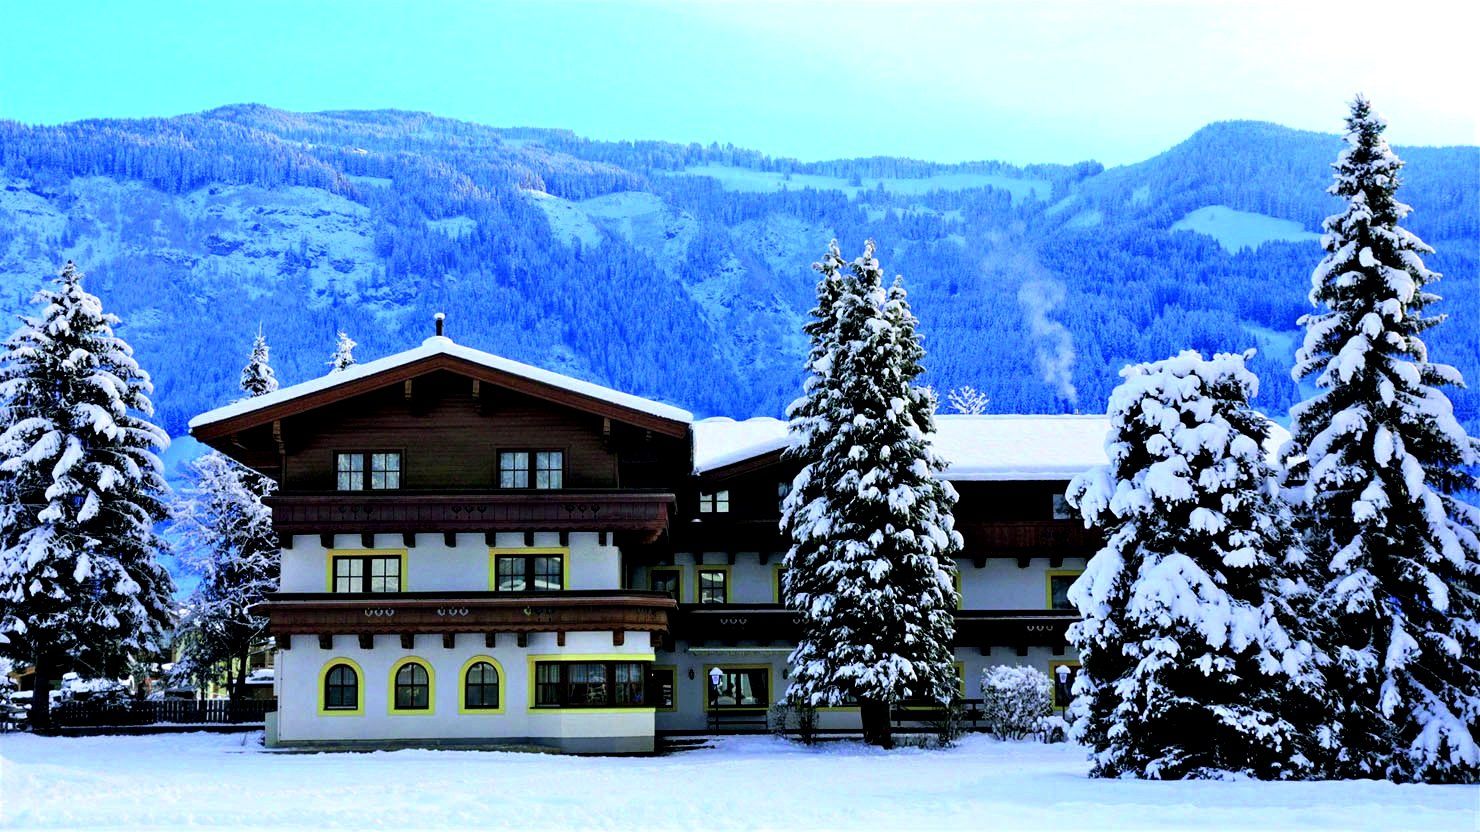 Meer info over Gasthof Alpenrose  bij Wintertrex